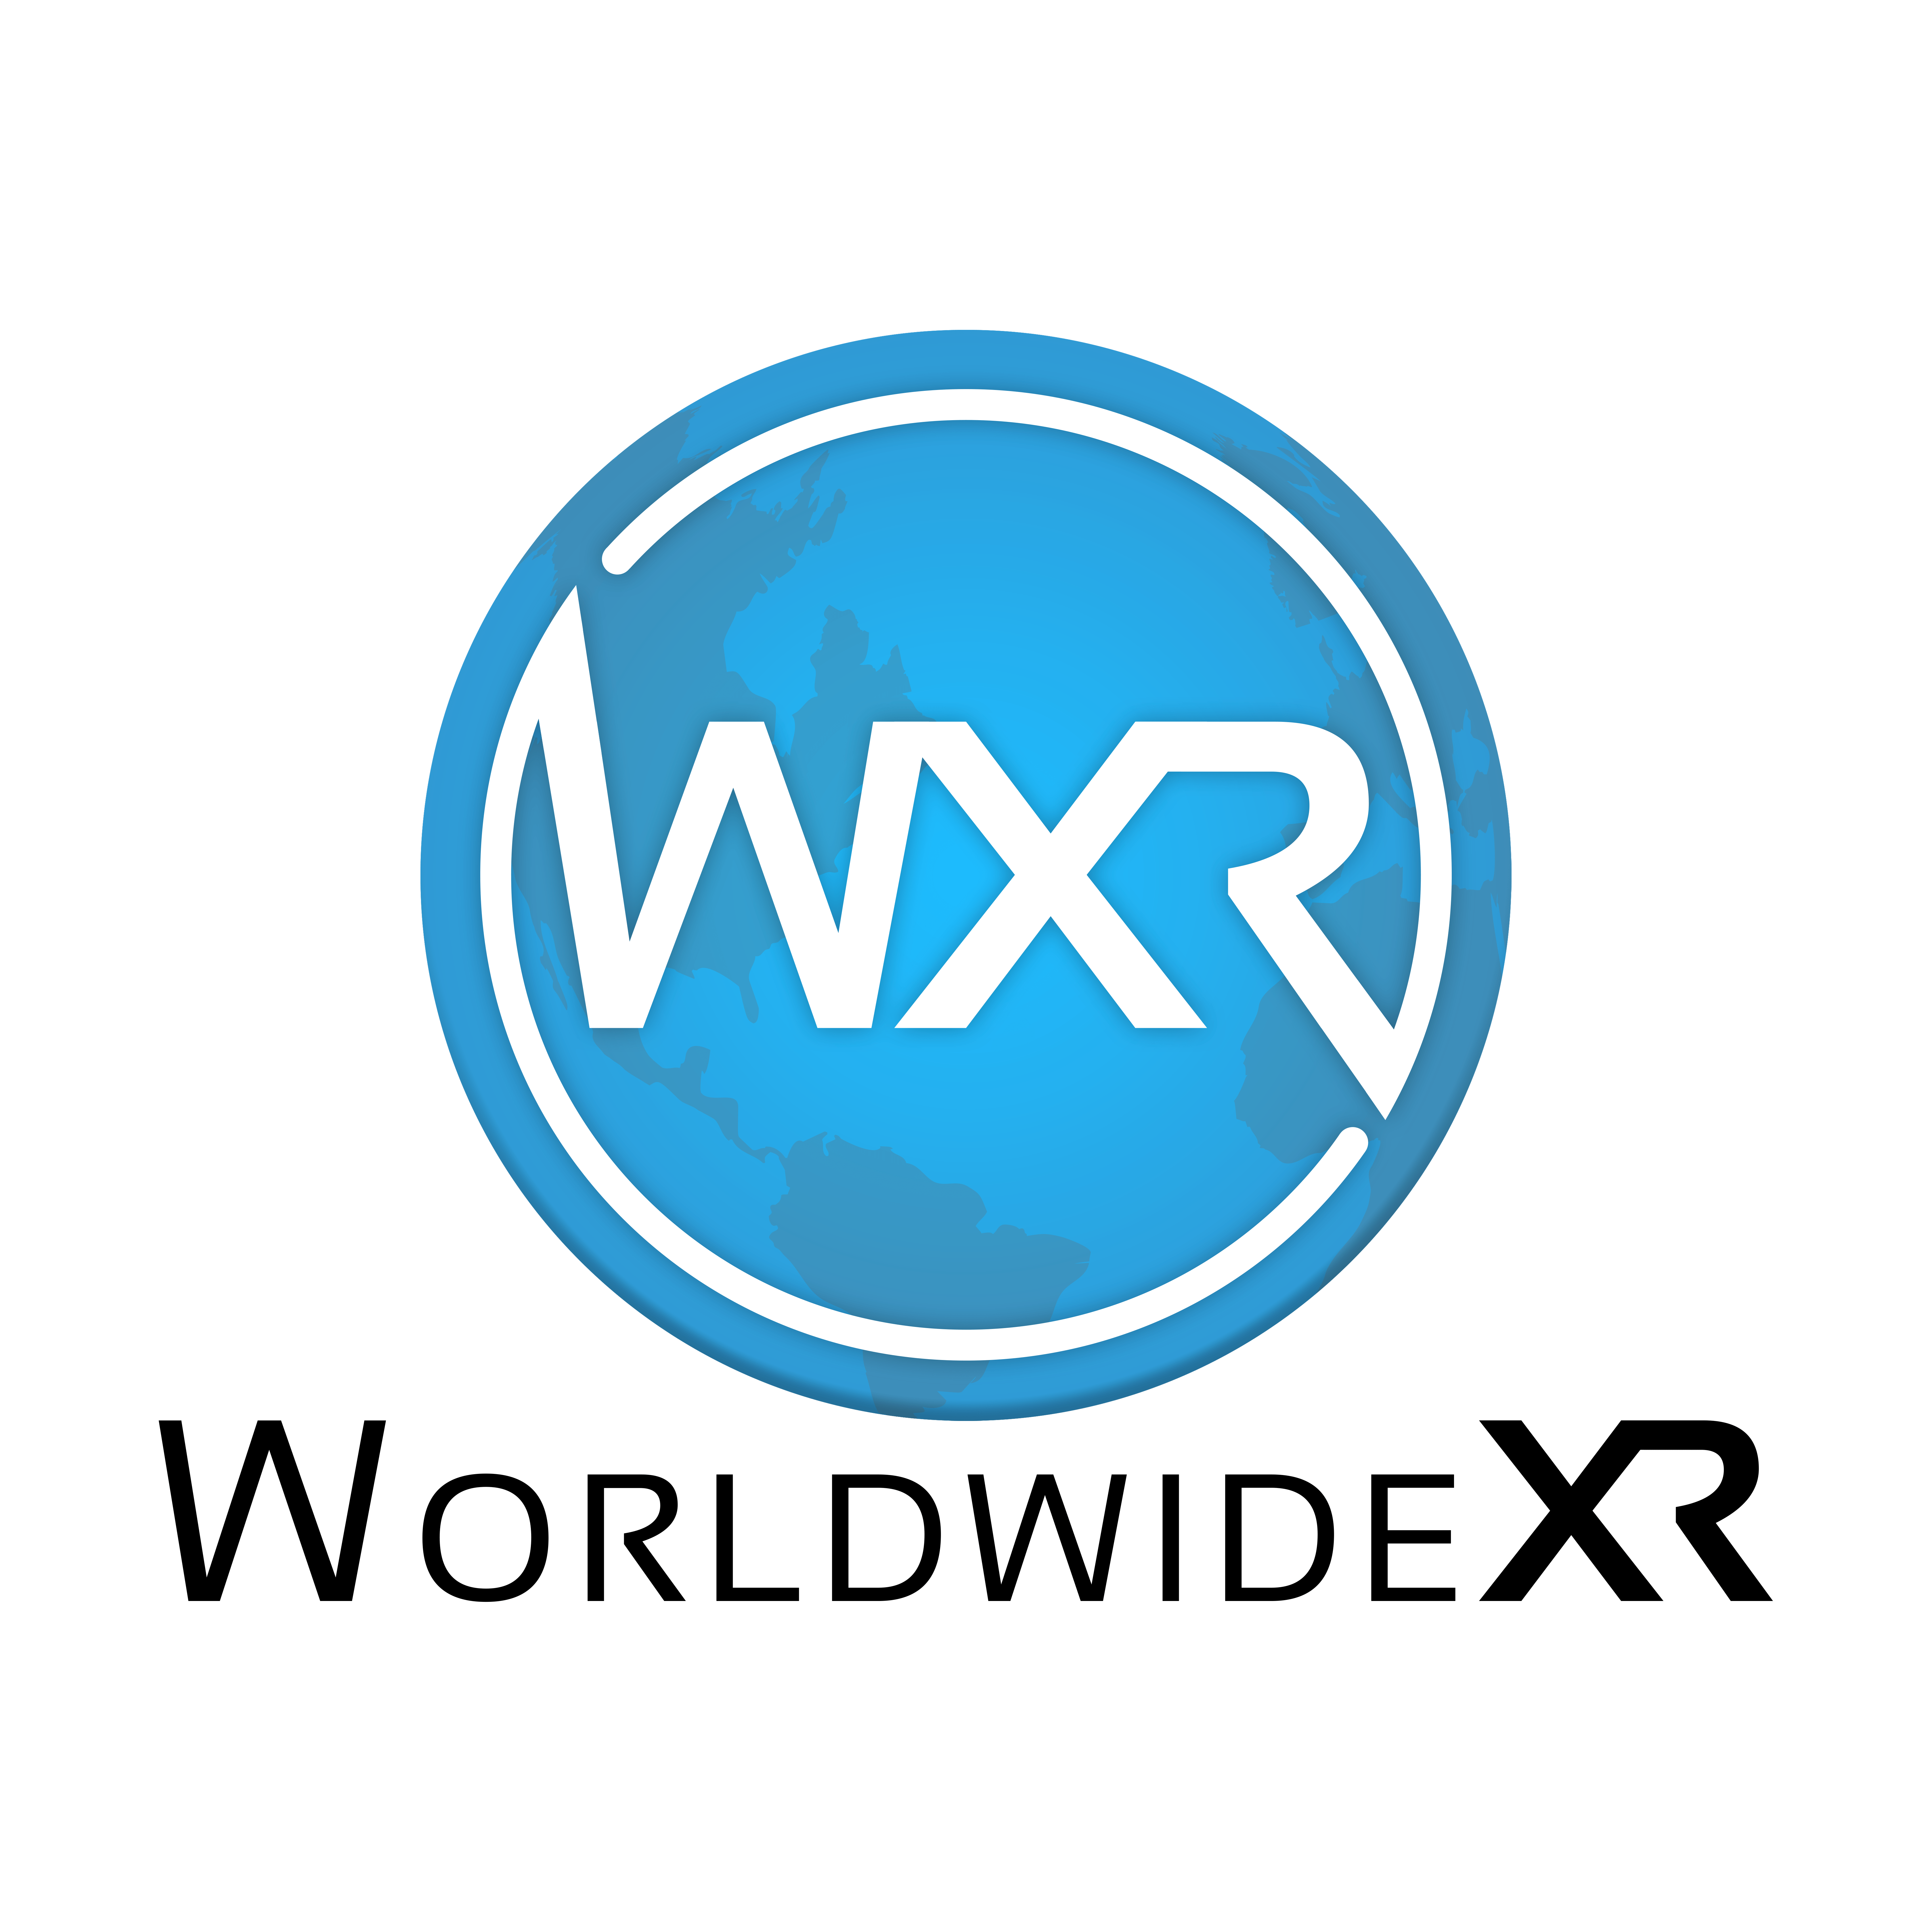 World Wide XR